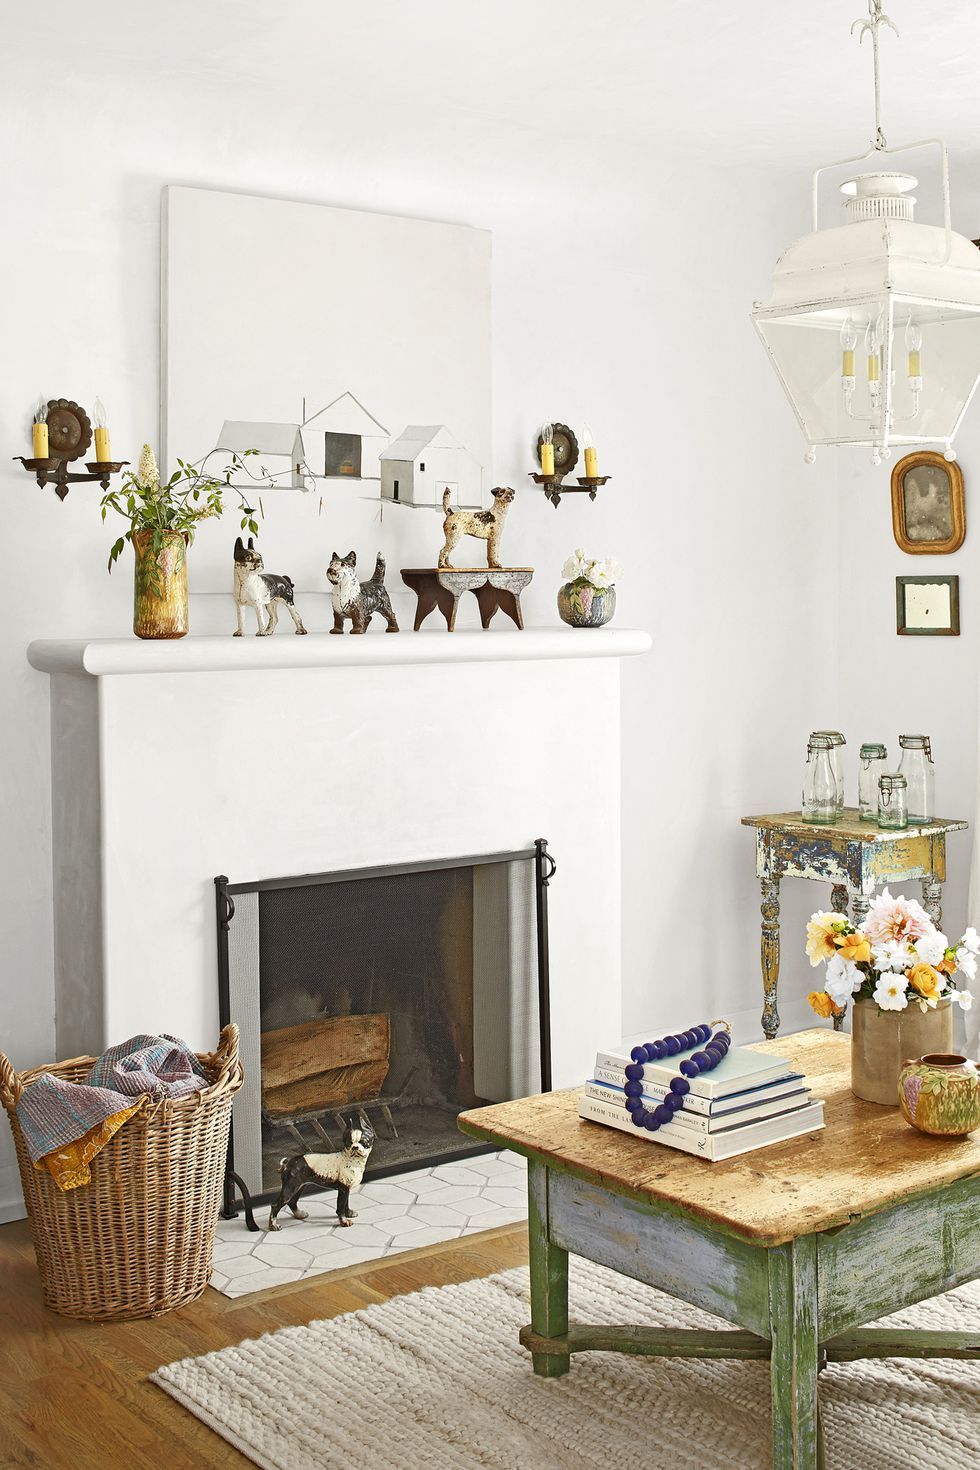 45 Best Fireplace Mantel Ideas Design Photos - Home Decor For Fireplace Mantels